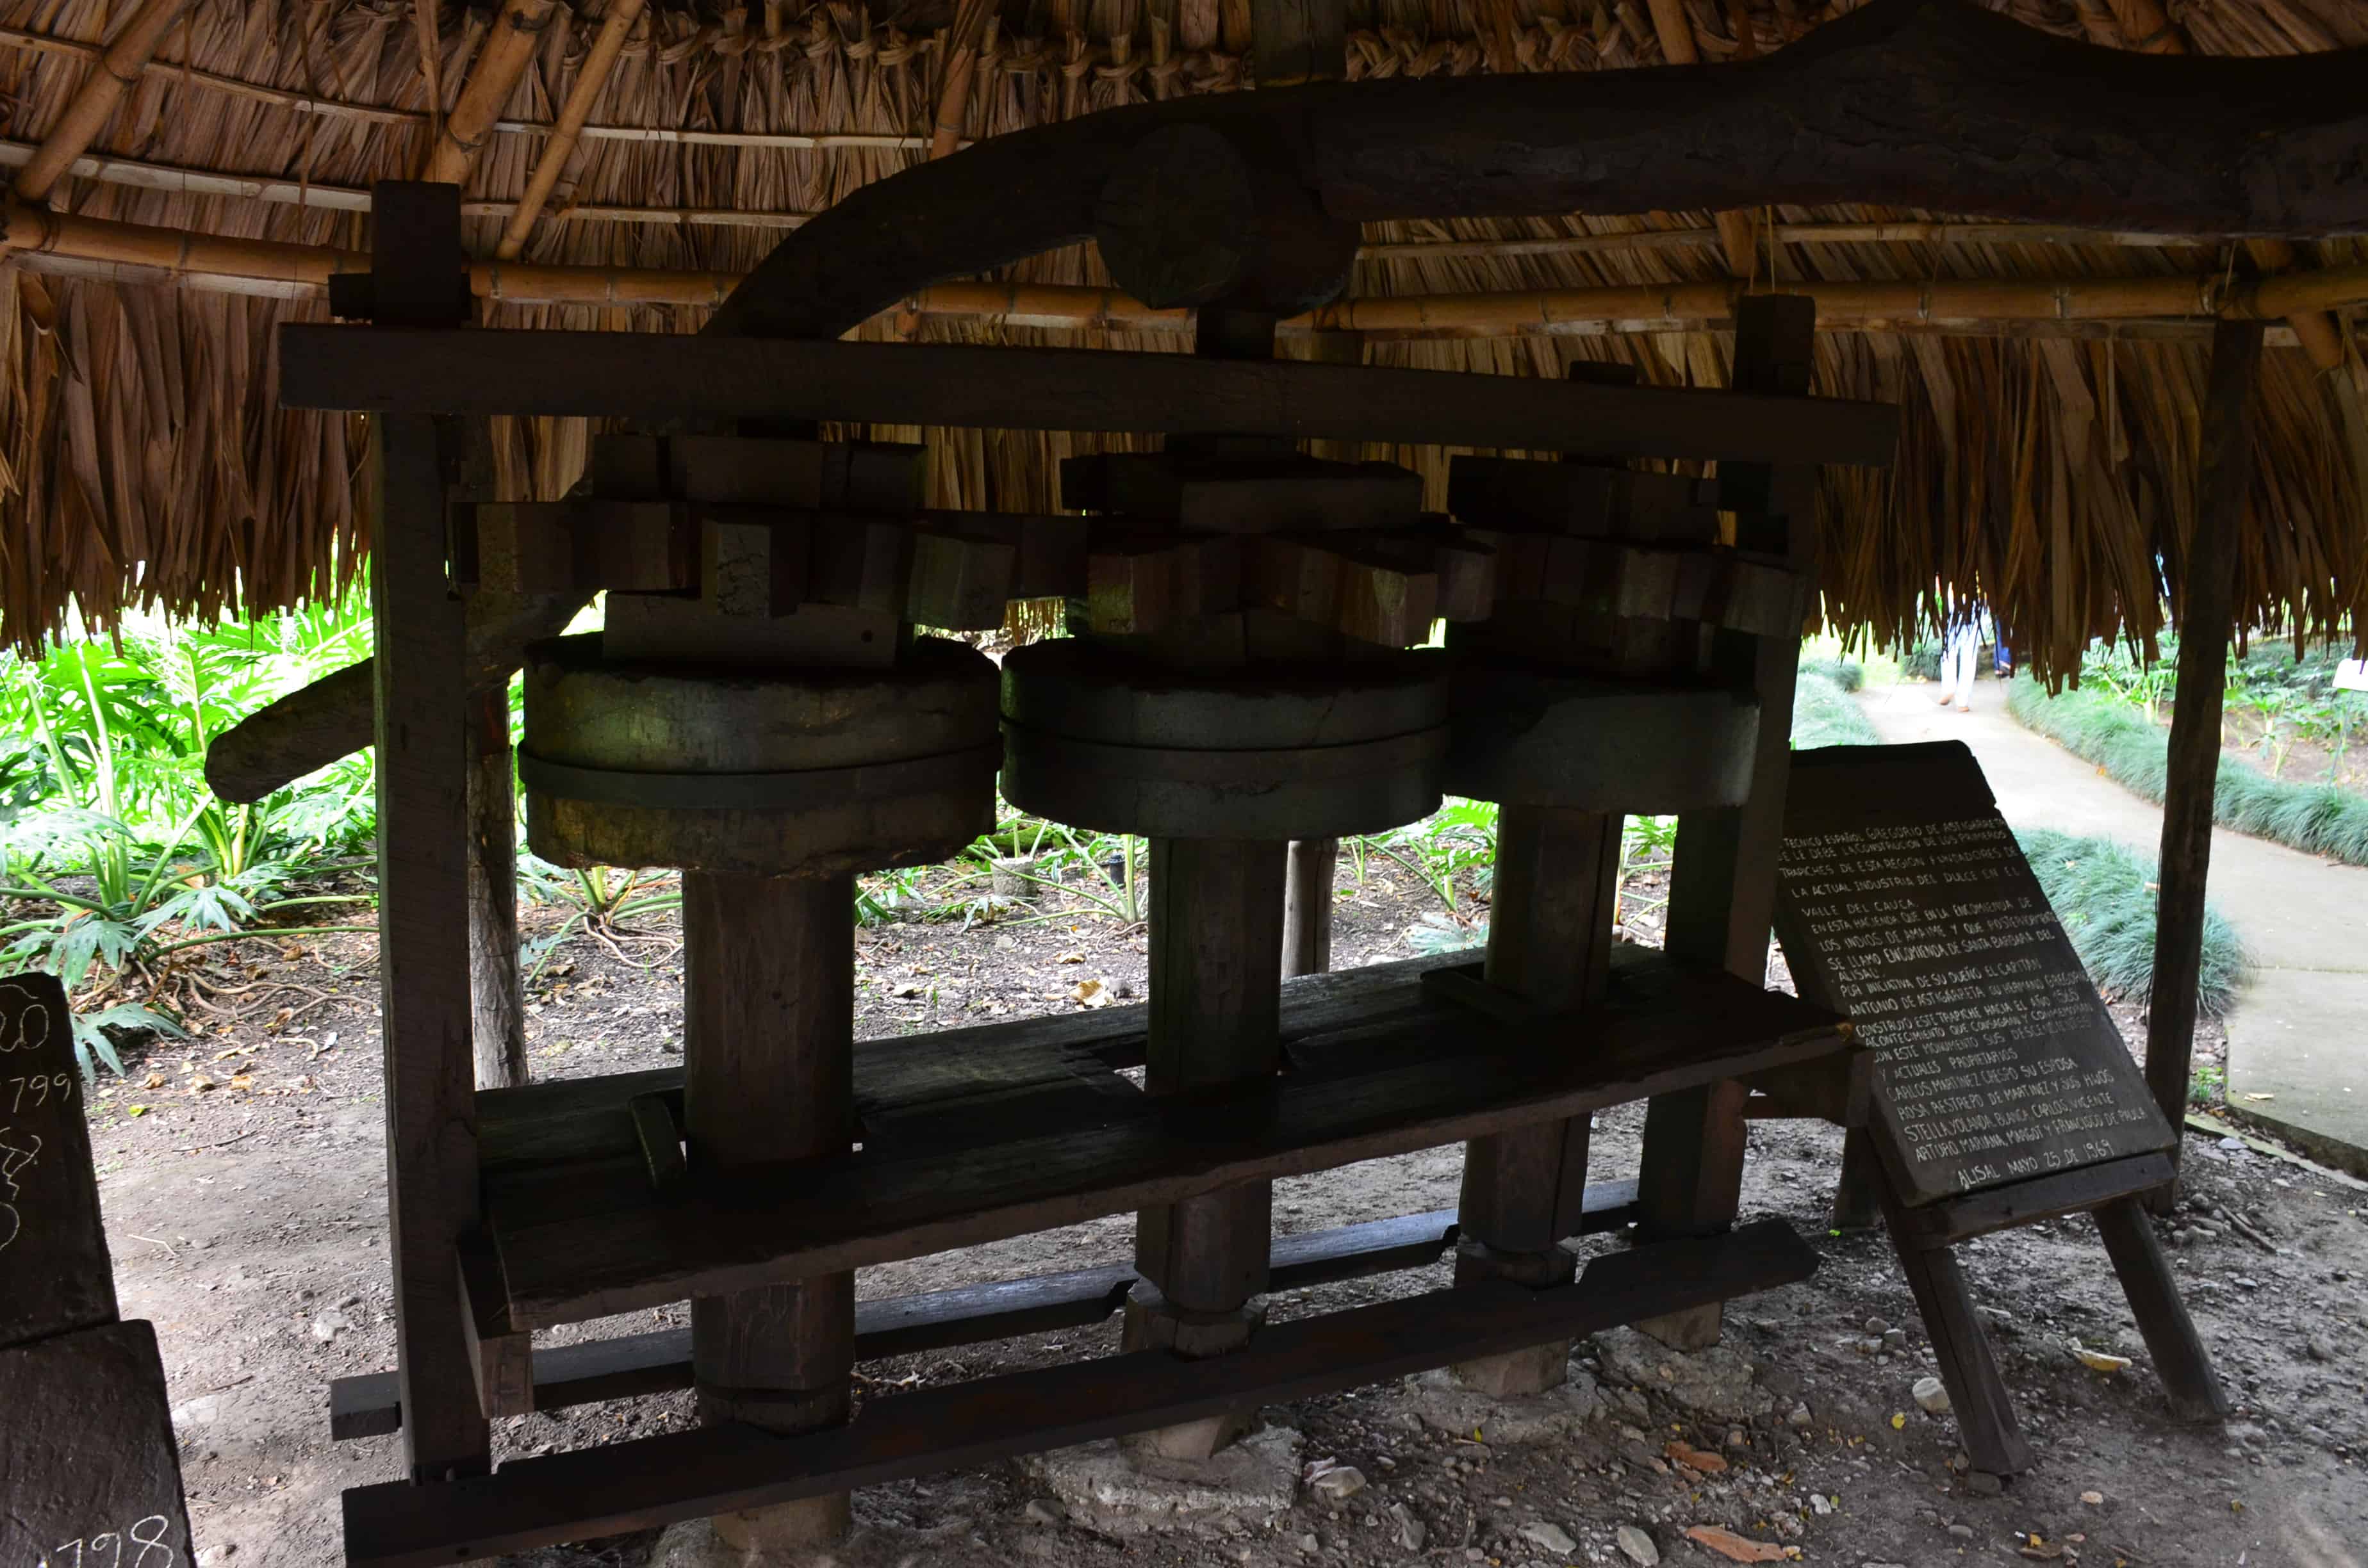 Rancho del Alizal at the Sugarcane Museum in Valle del Cauca, Colombia